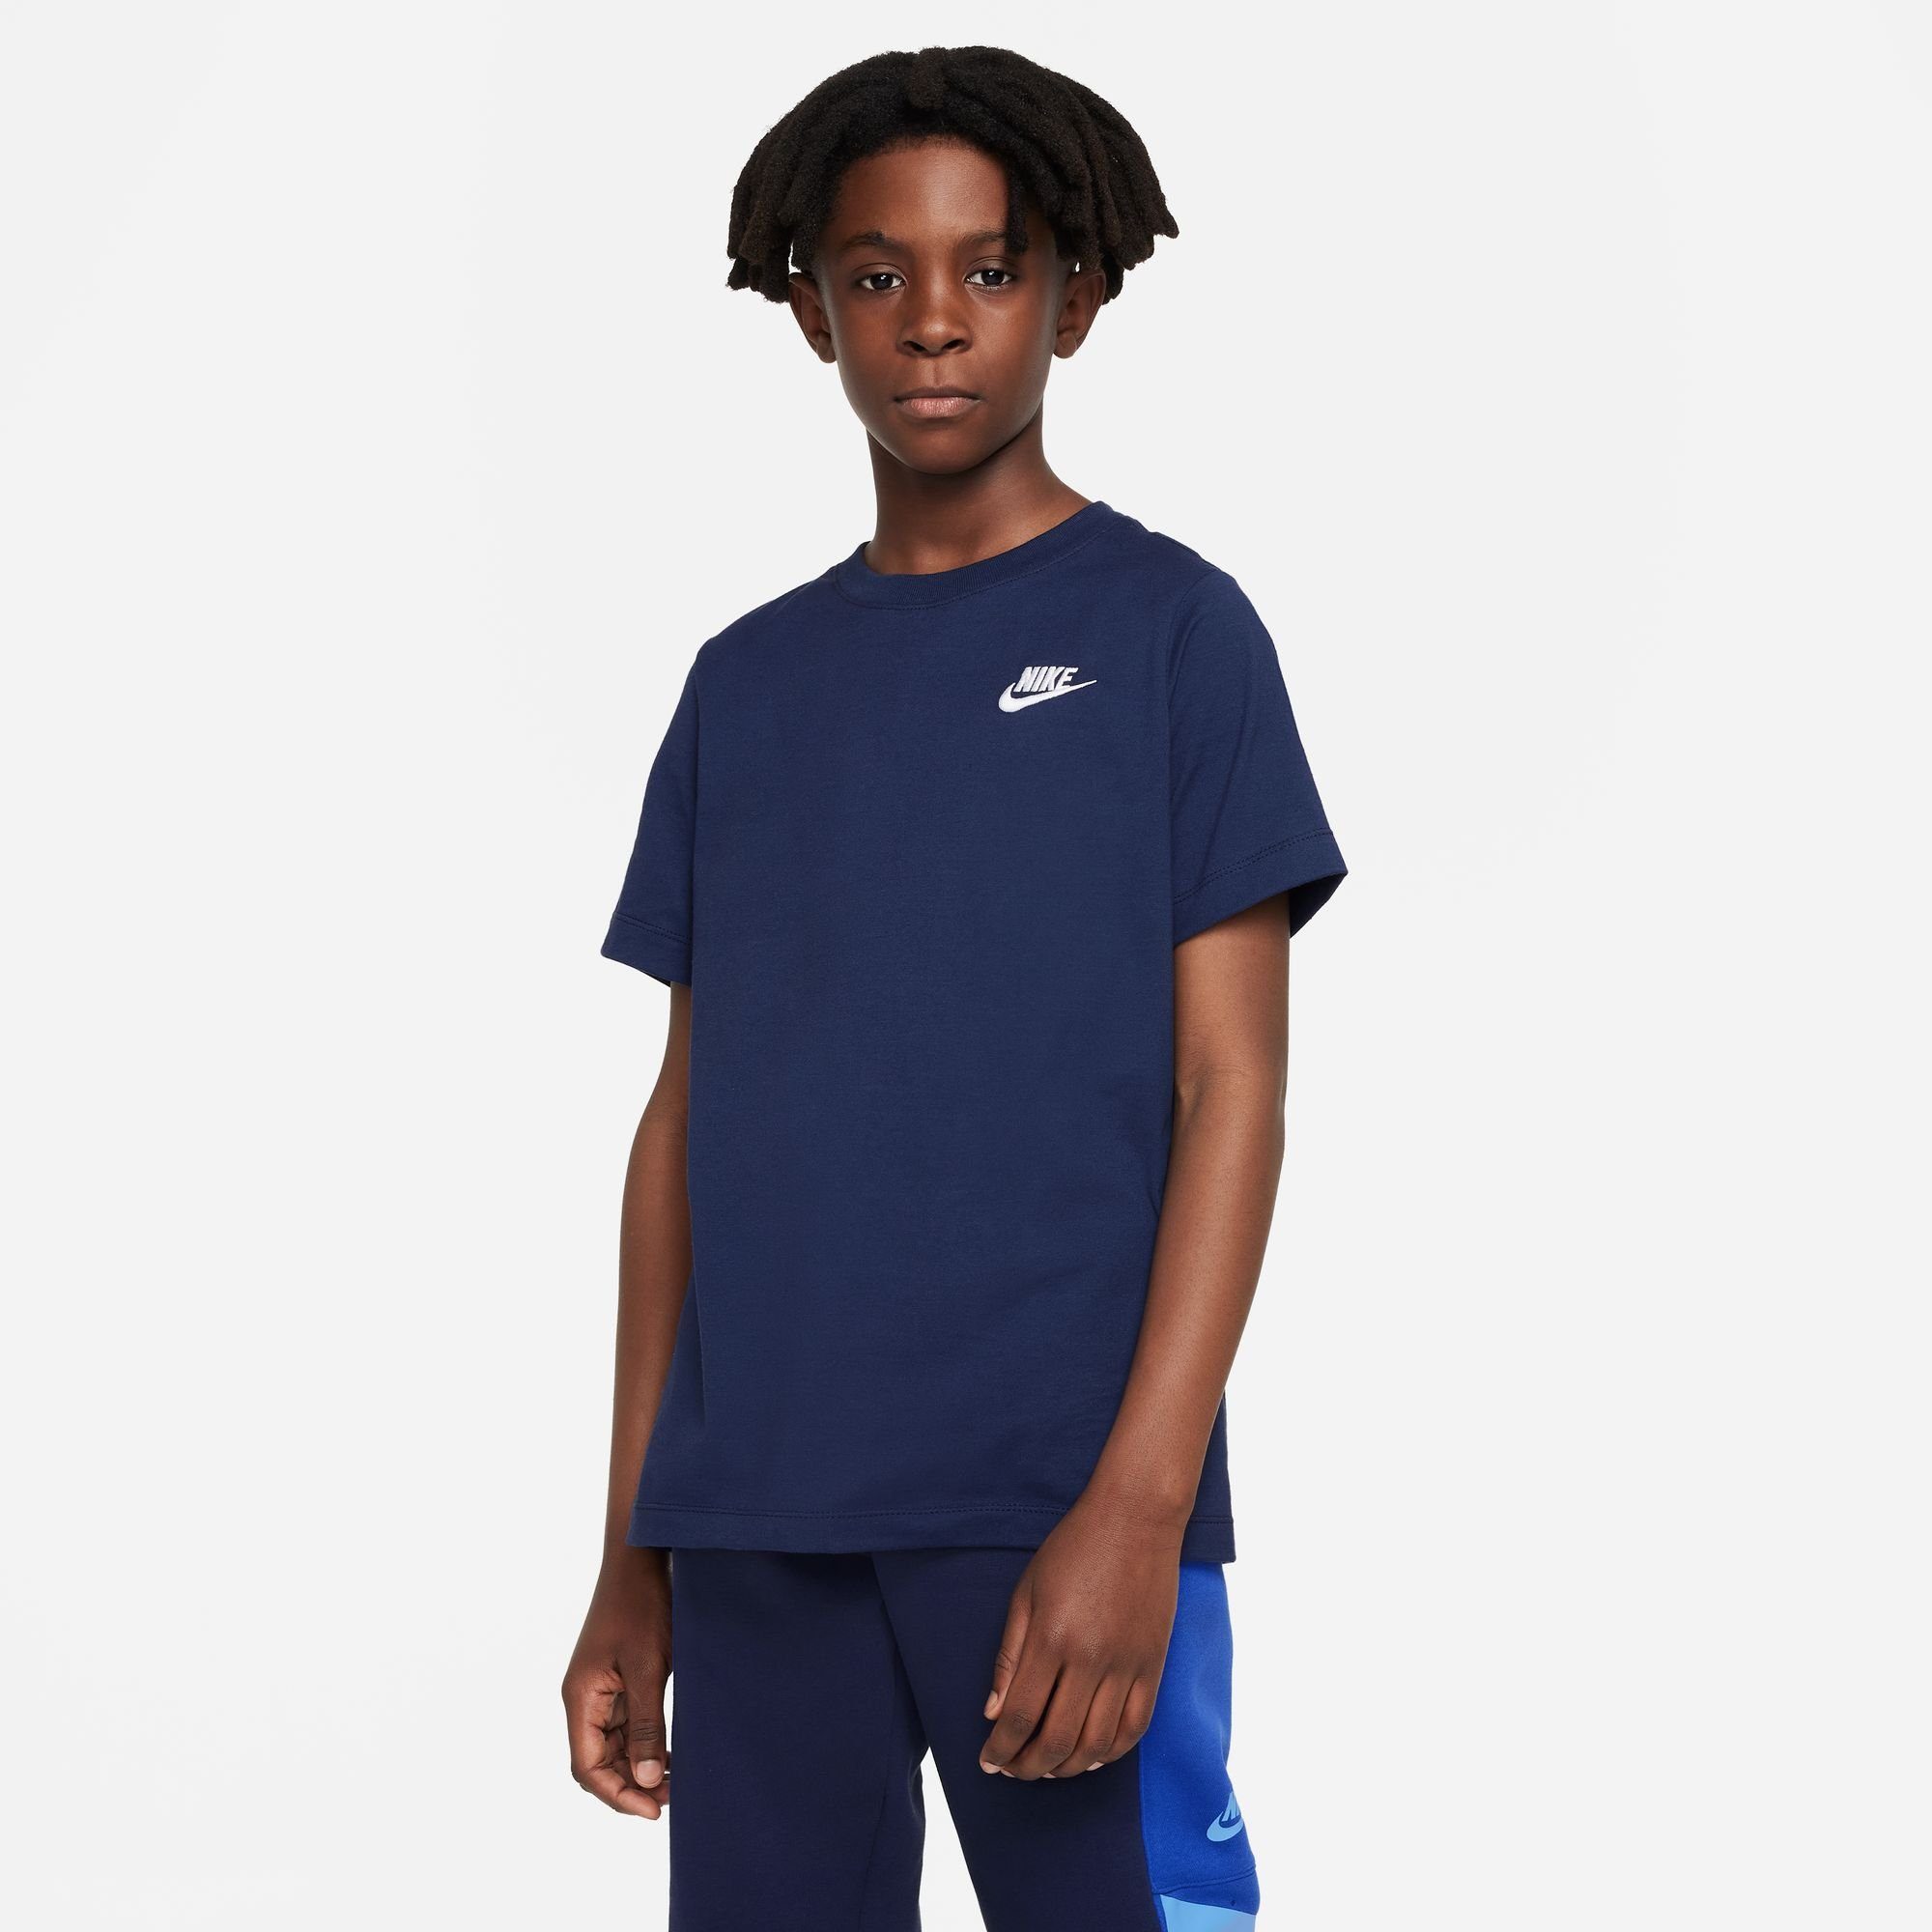 Nike KIDS' BIG blau T-Shirt T-SHIRT Sportswear